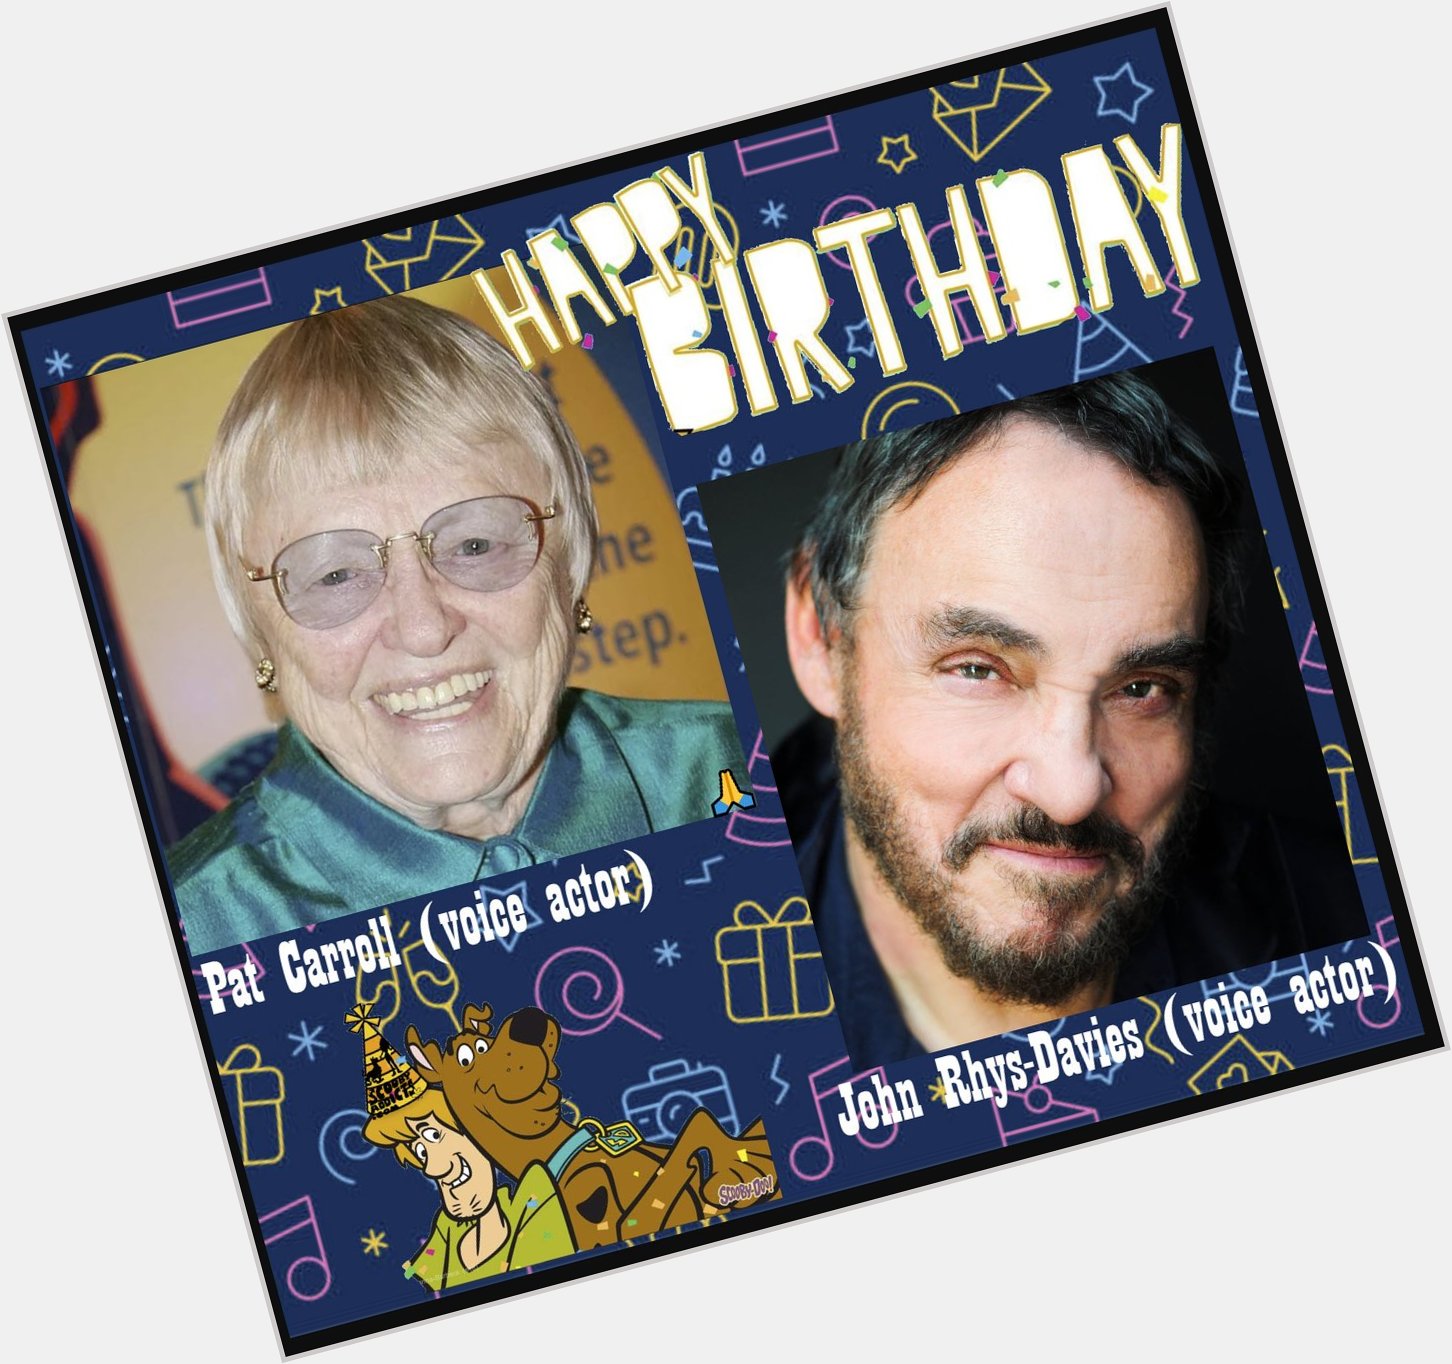 Birthdays - May 5 HAPPY BIRTHDAY Pat Carroll
John Rhys-Davies 